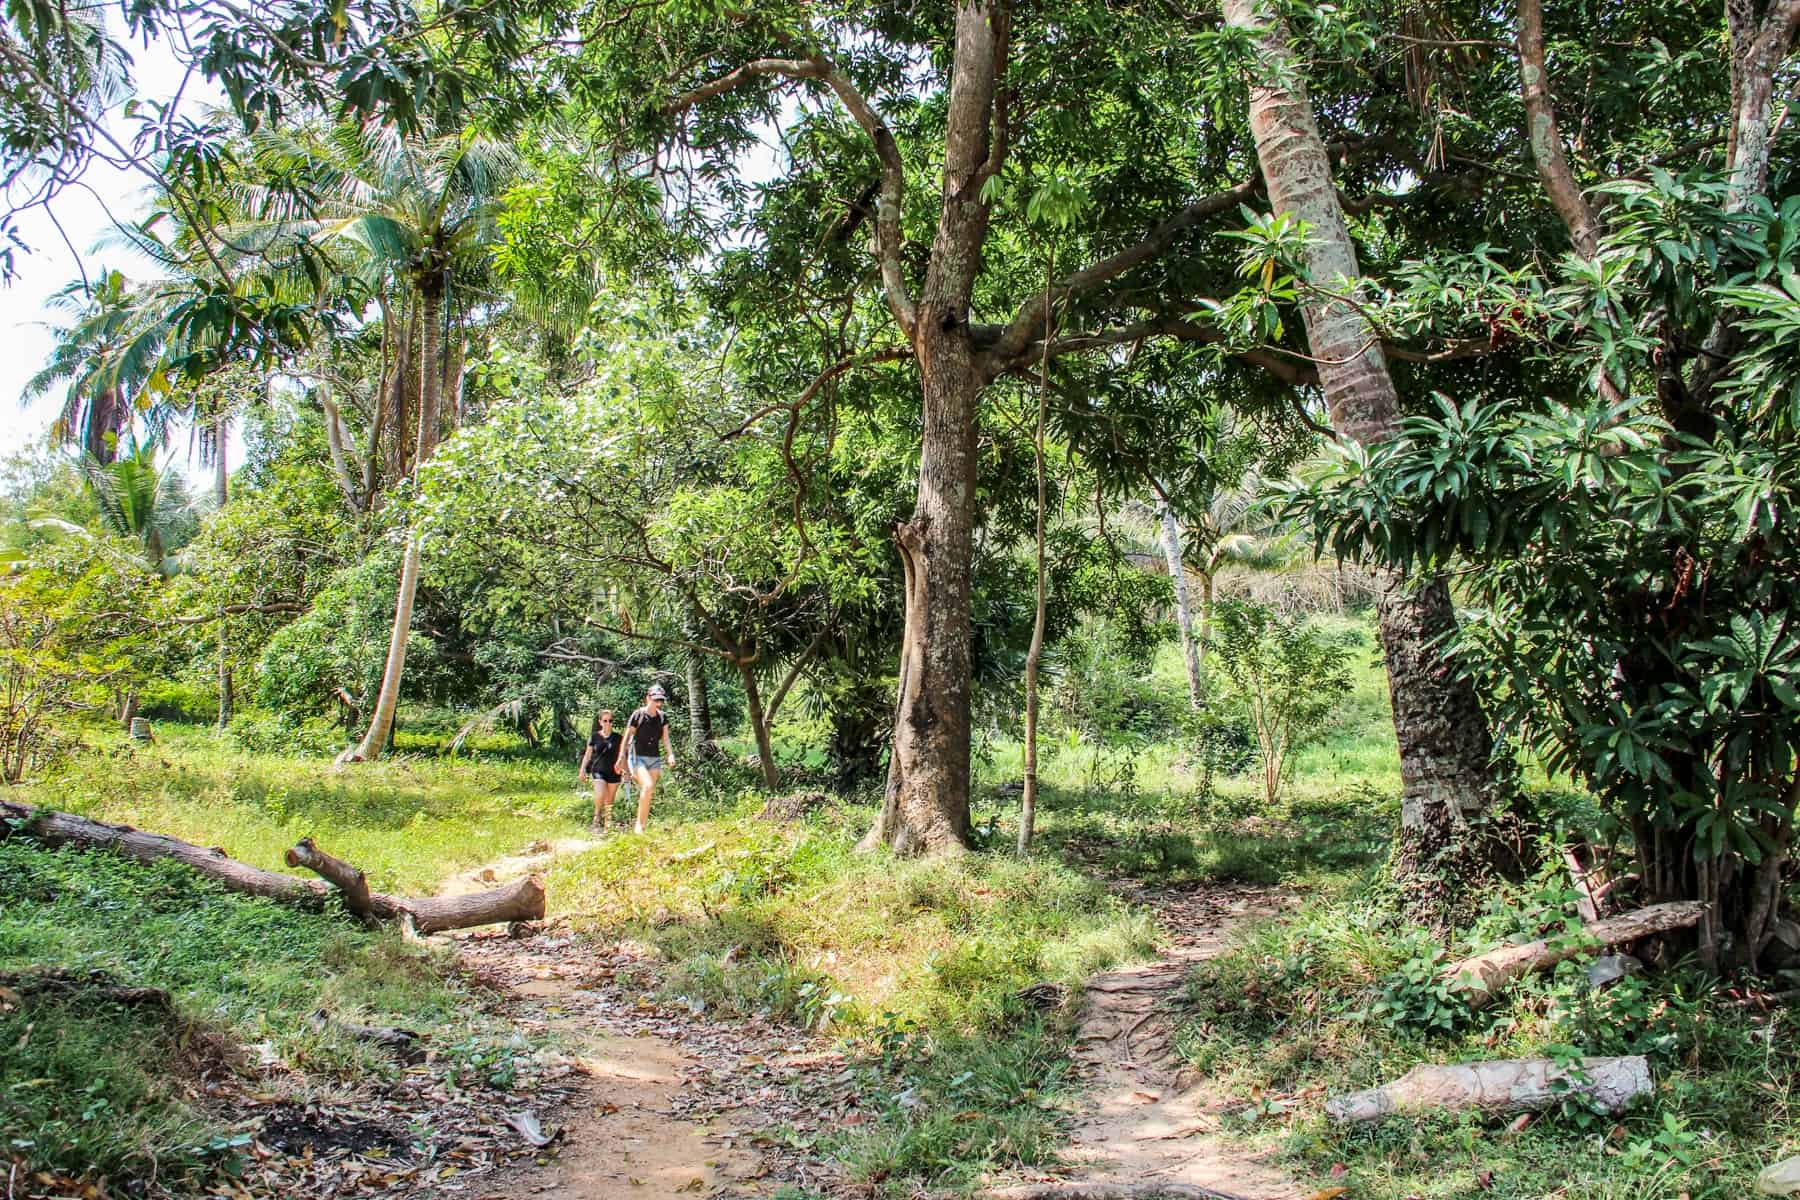 Two women, wearing black, trek through jungle forest on worn trails underneath tall trees